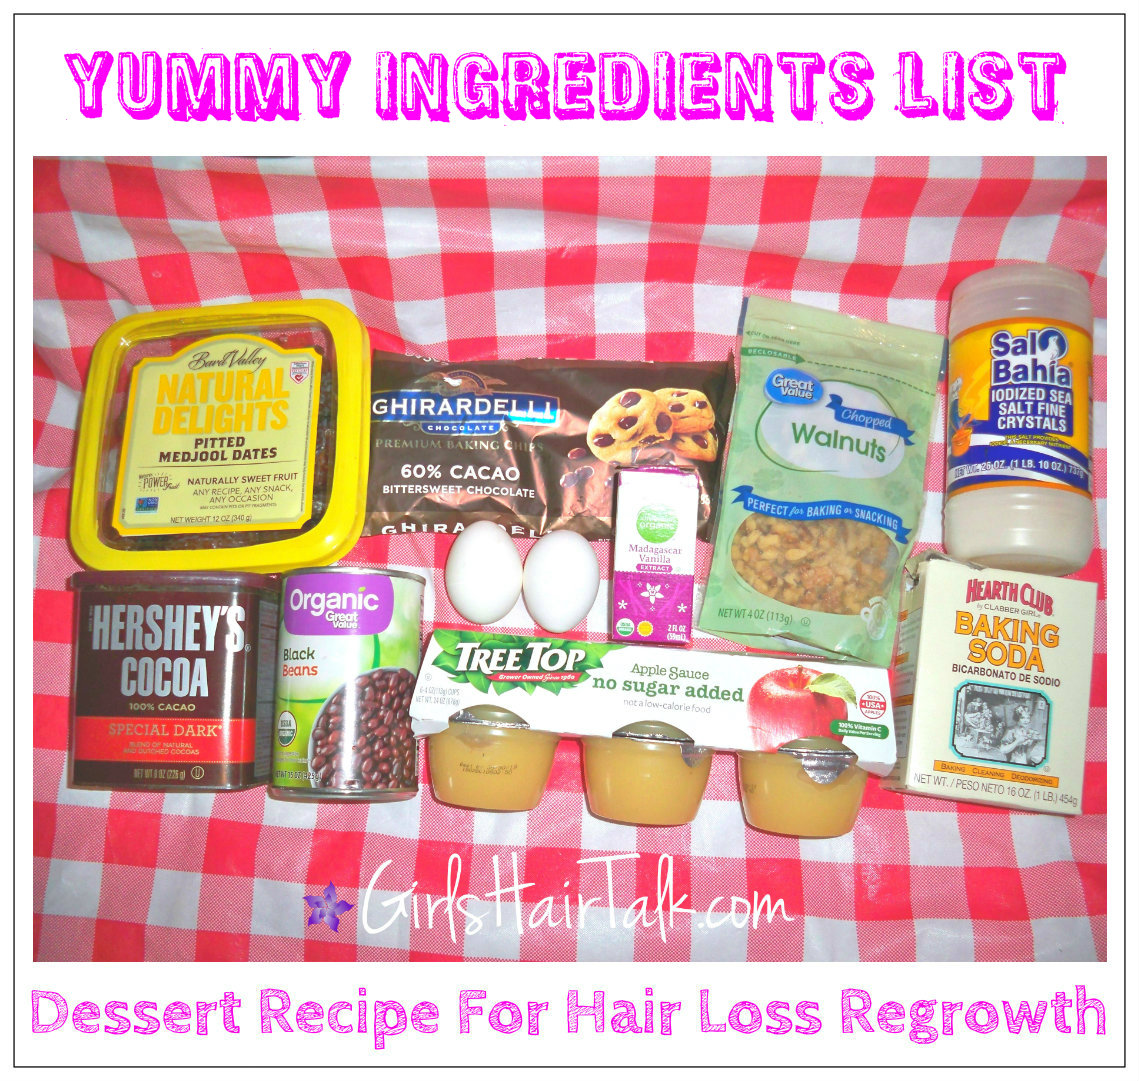 Ingredients for healthy brownie recipe!